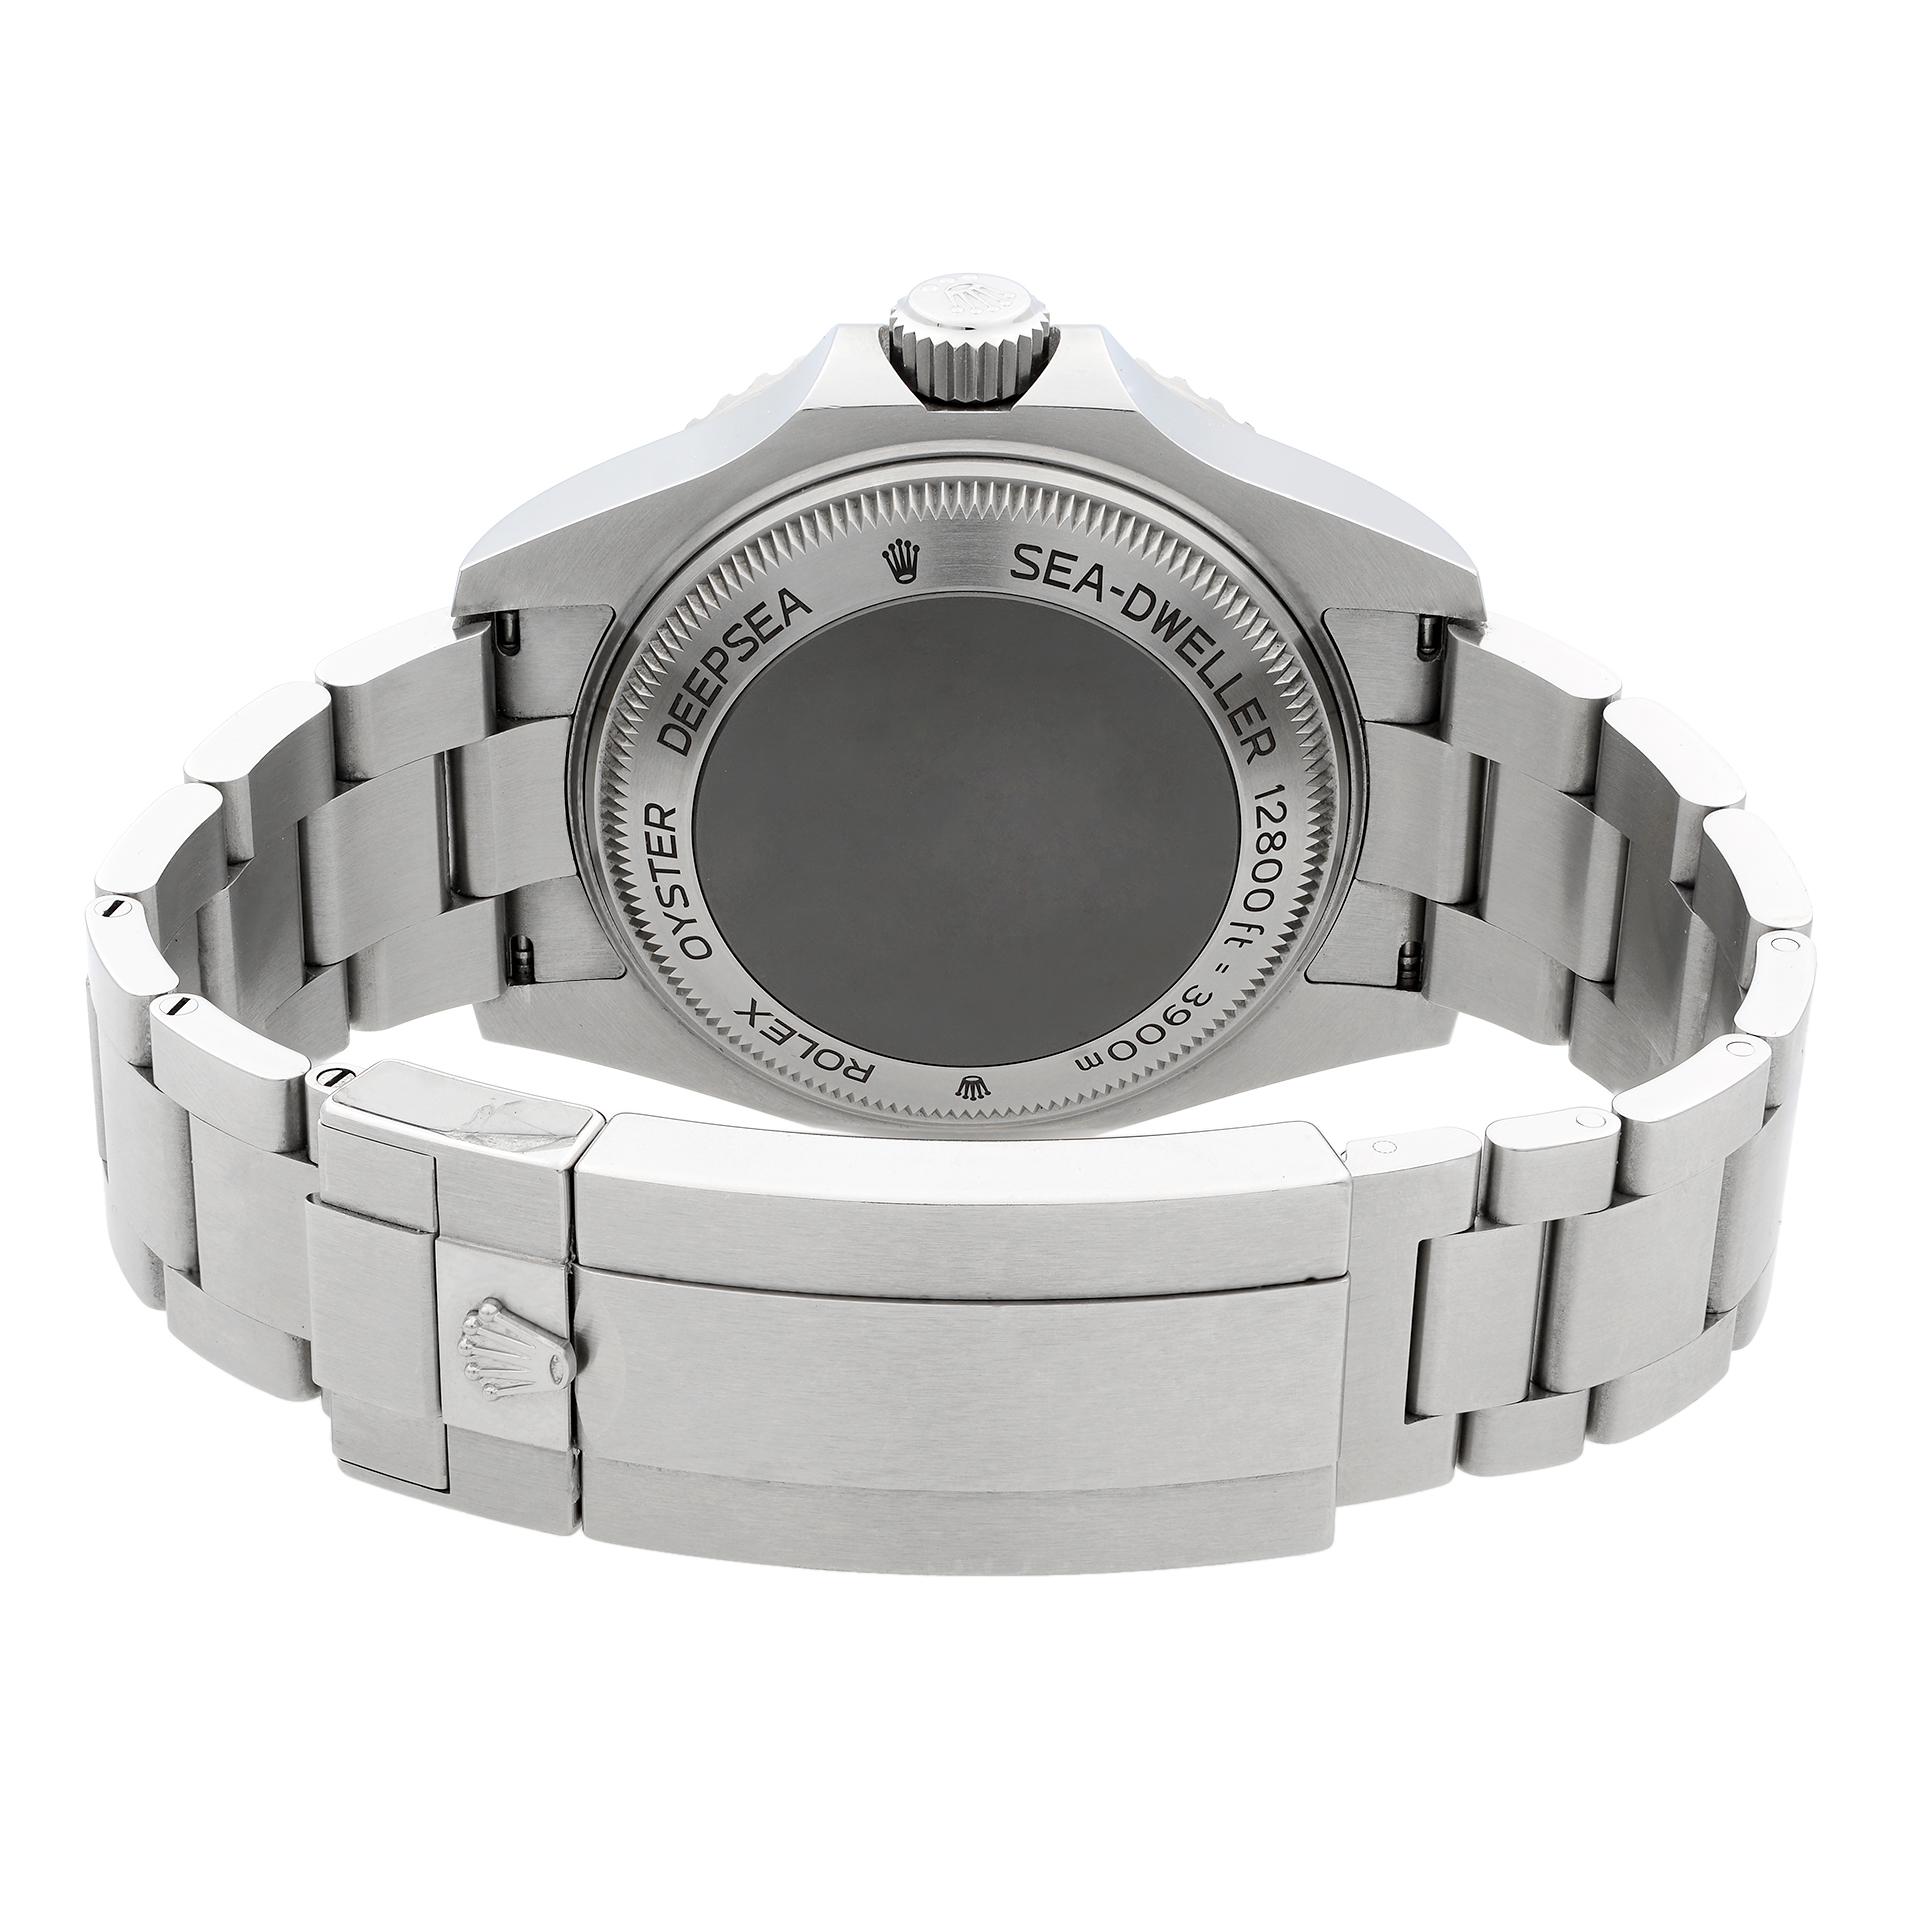 6th image of Rolex Rolex Sea-Dweller 126660 Wristwatch